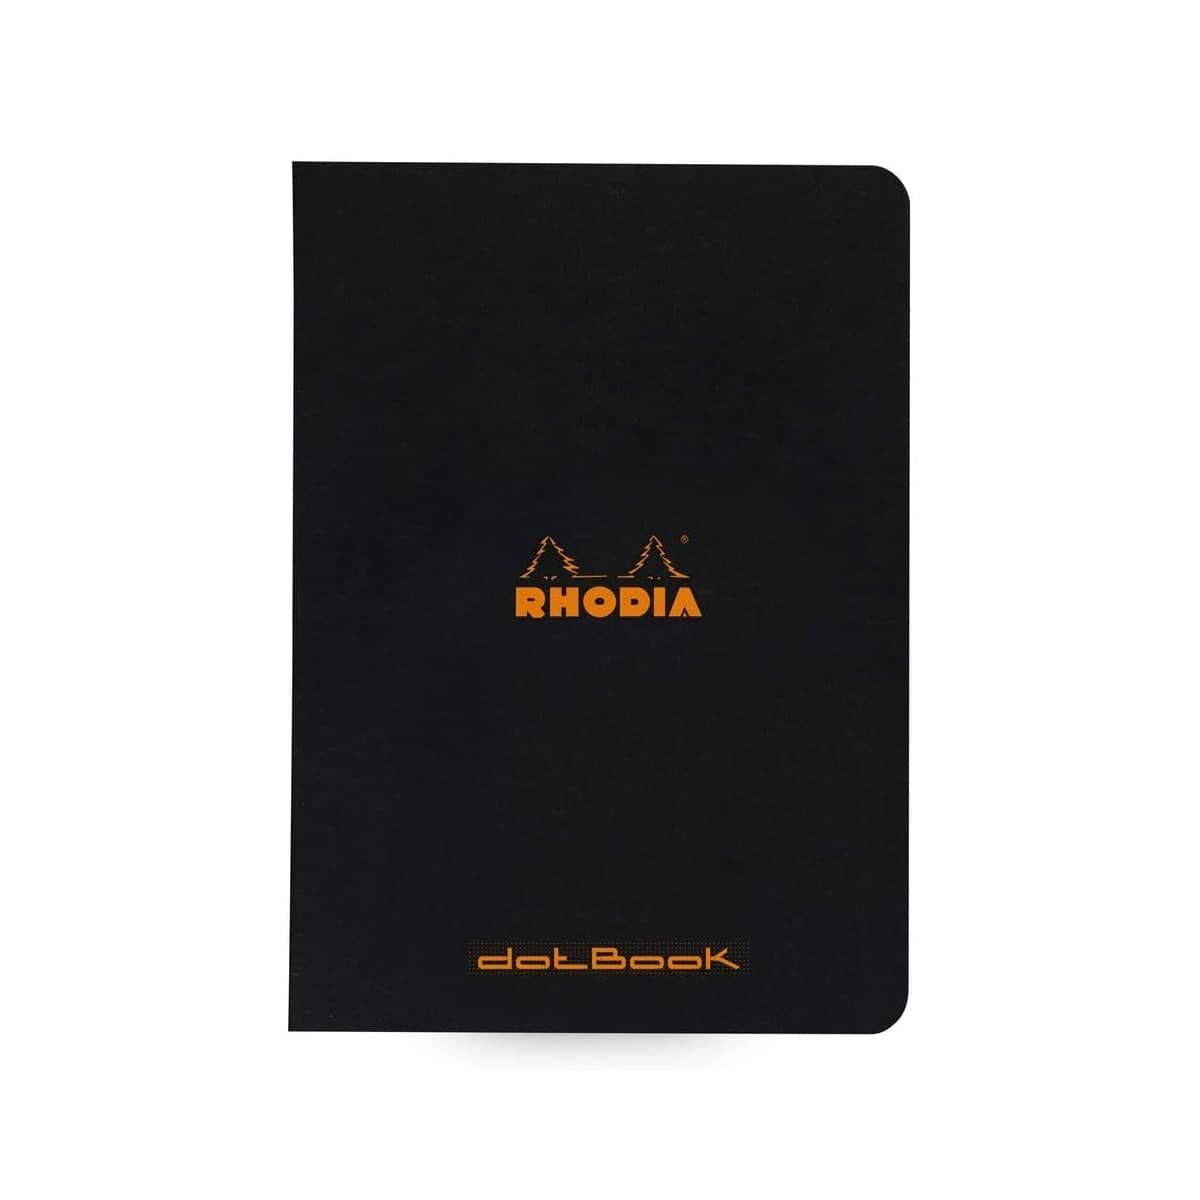 Dot Grid Slim Staple-bound Notebook (48-Sheet)